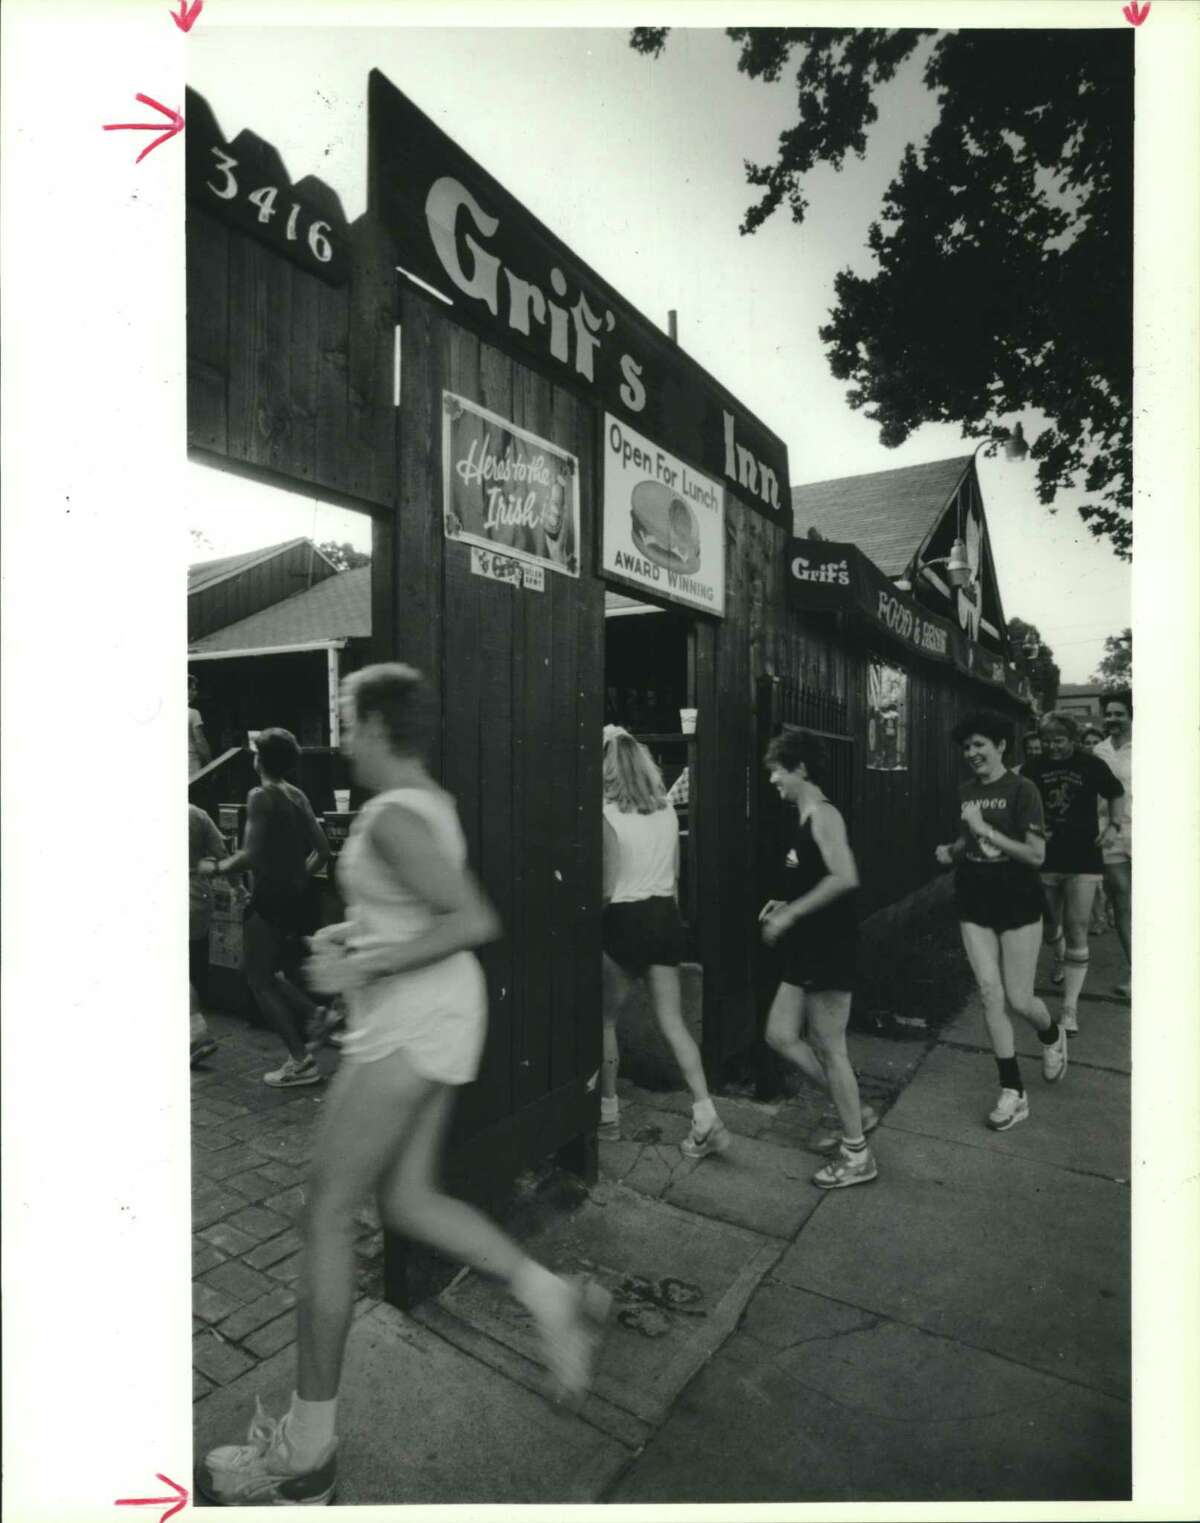 Runners Ramble Club members arrive at Grif's Inn after their run. Houston.